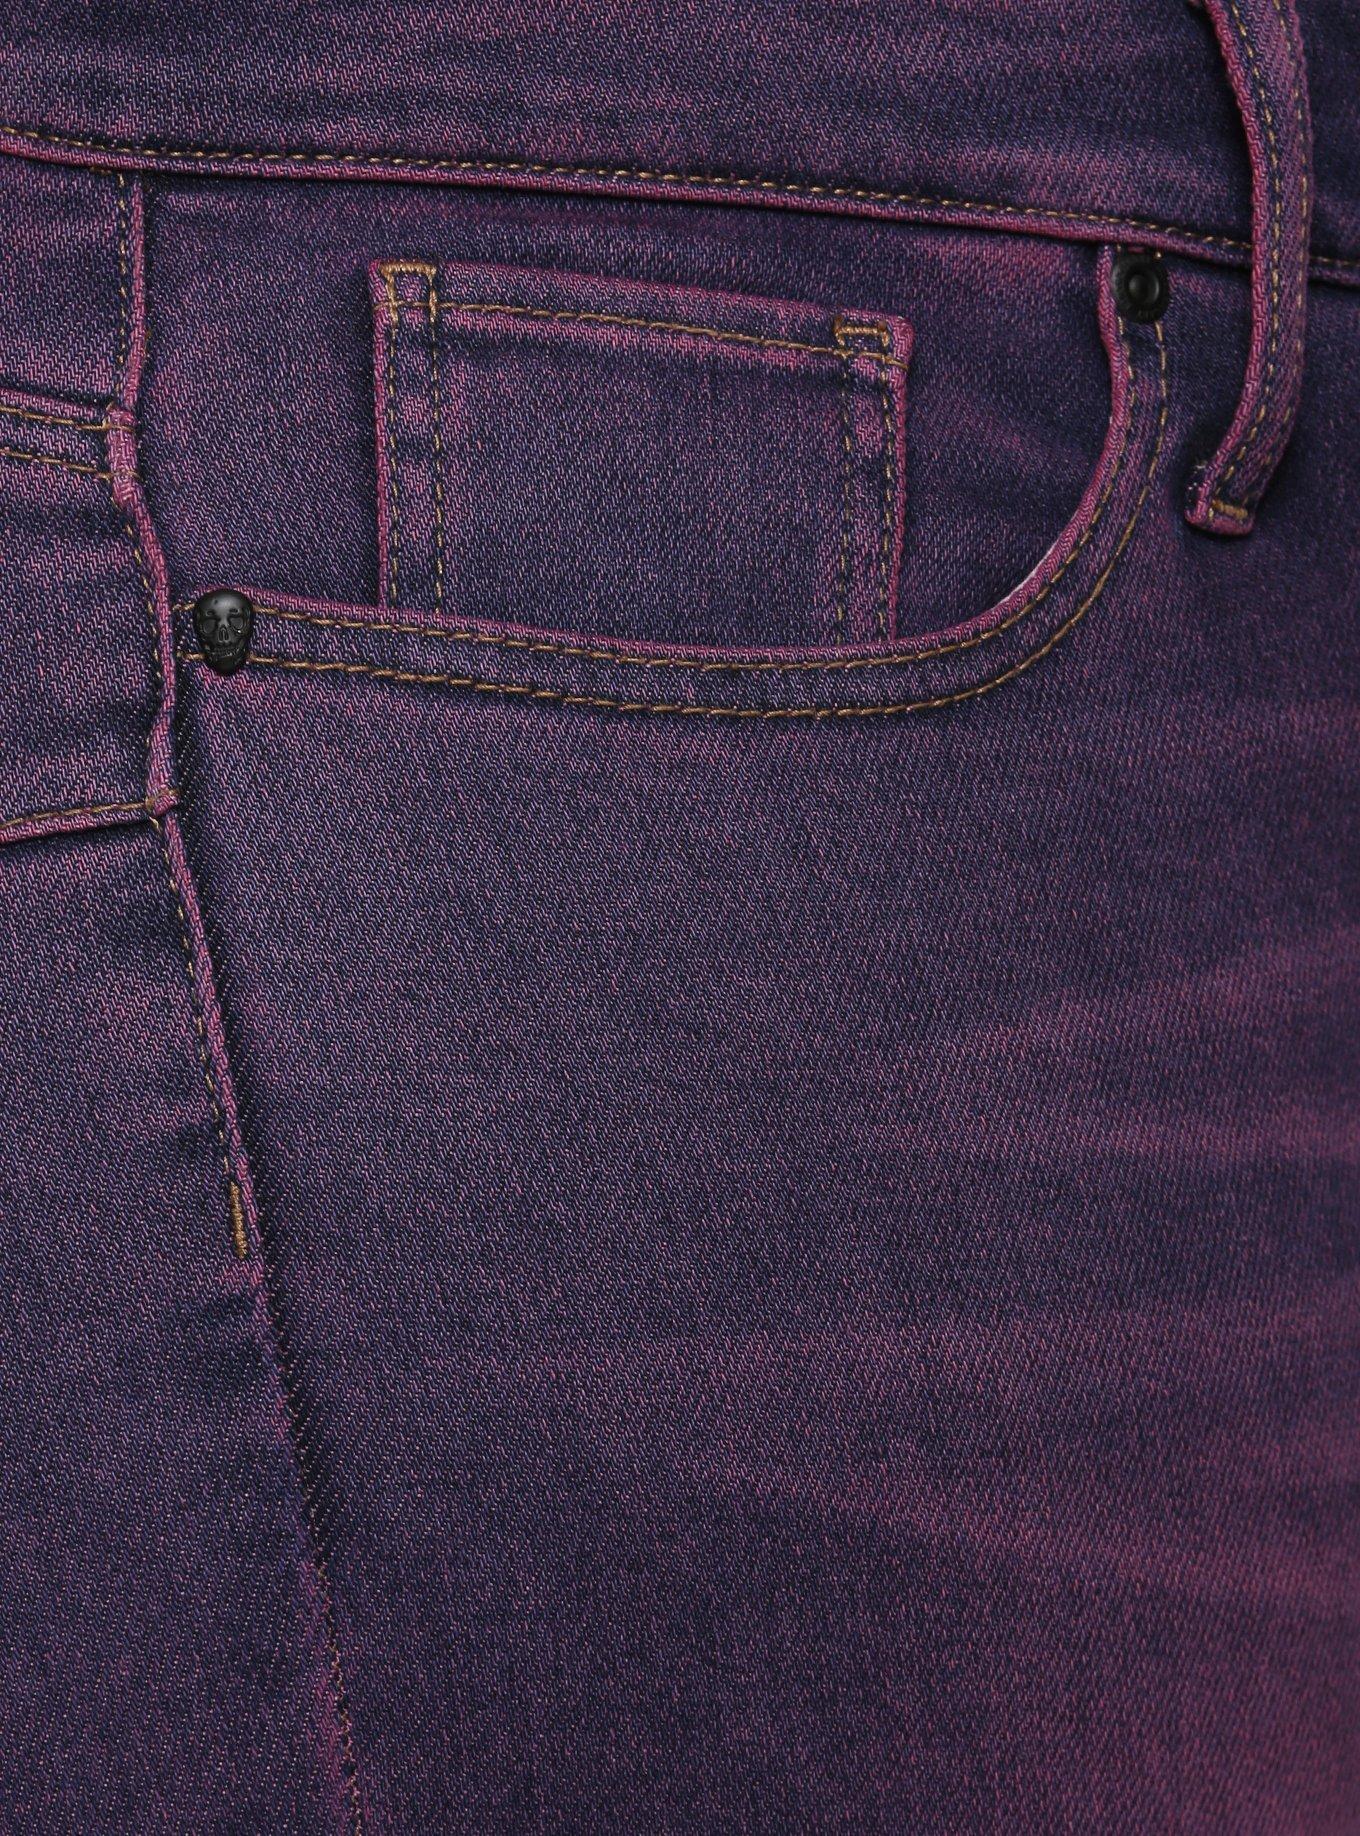 HT Denim Purple Wash Hi-Rise Super Skinny Jeans Plus Size, PURPLE, alternate